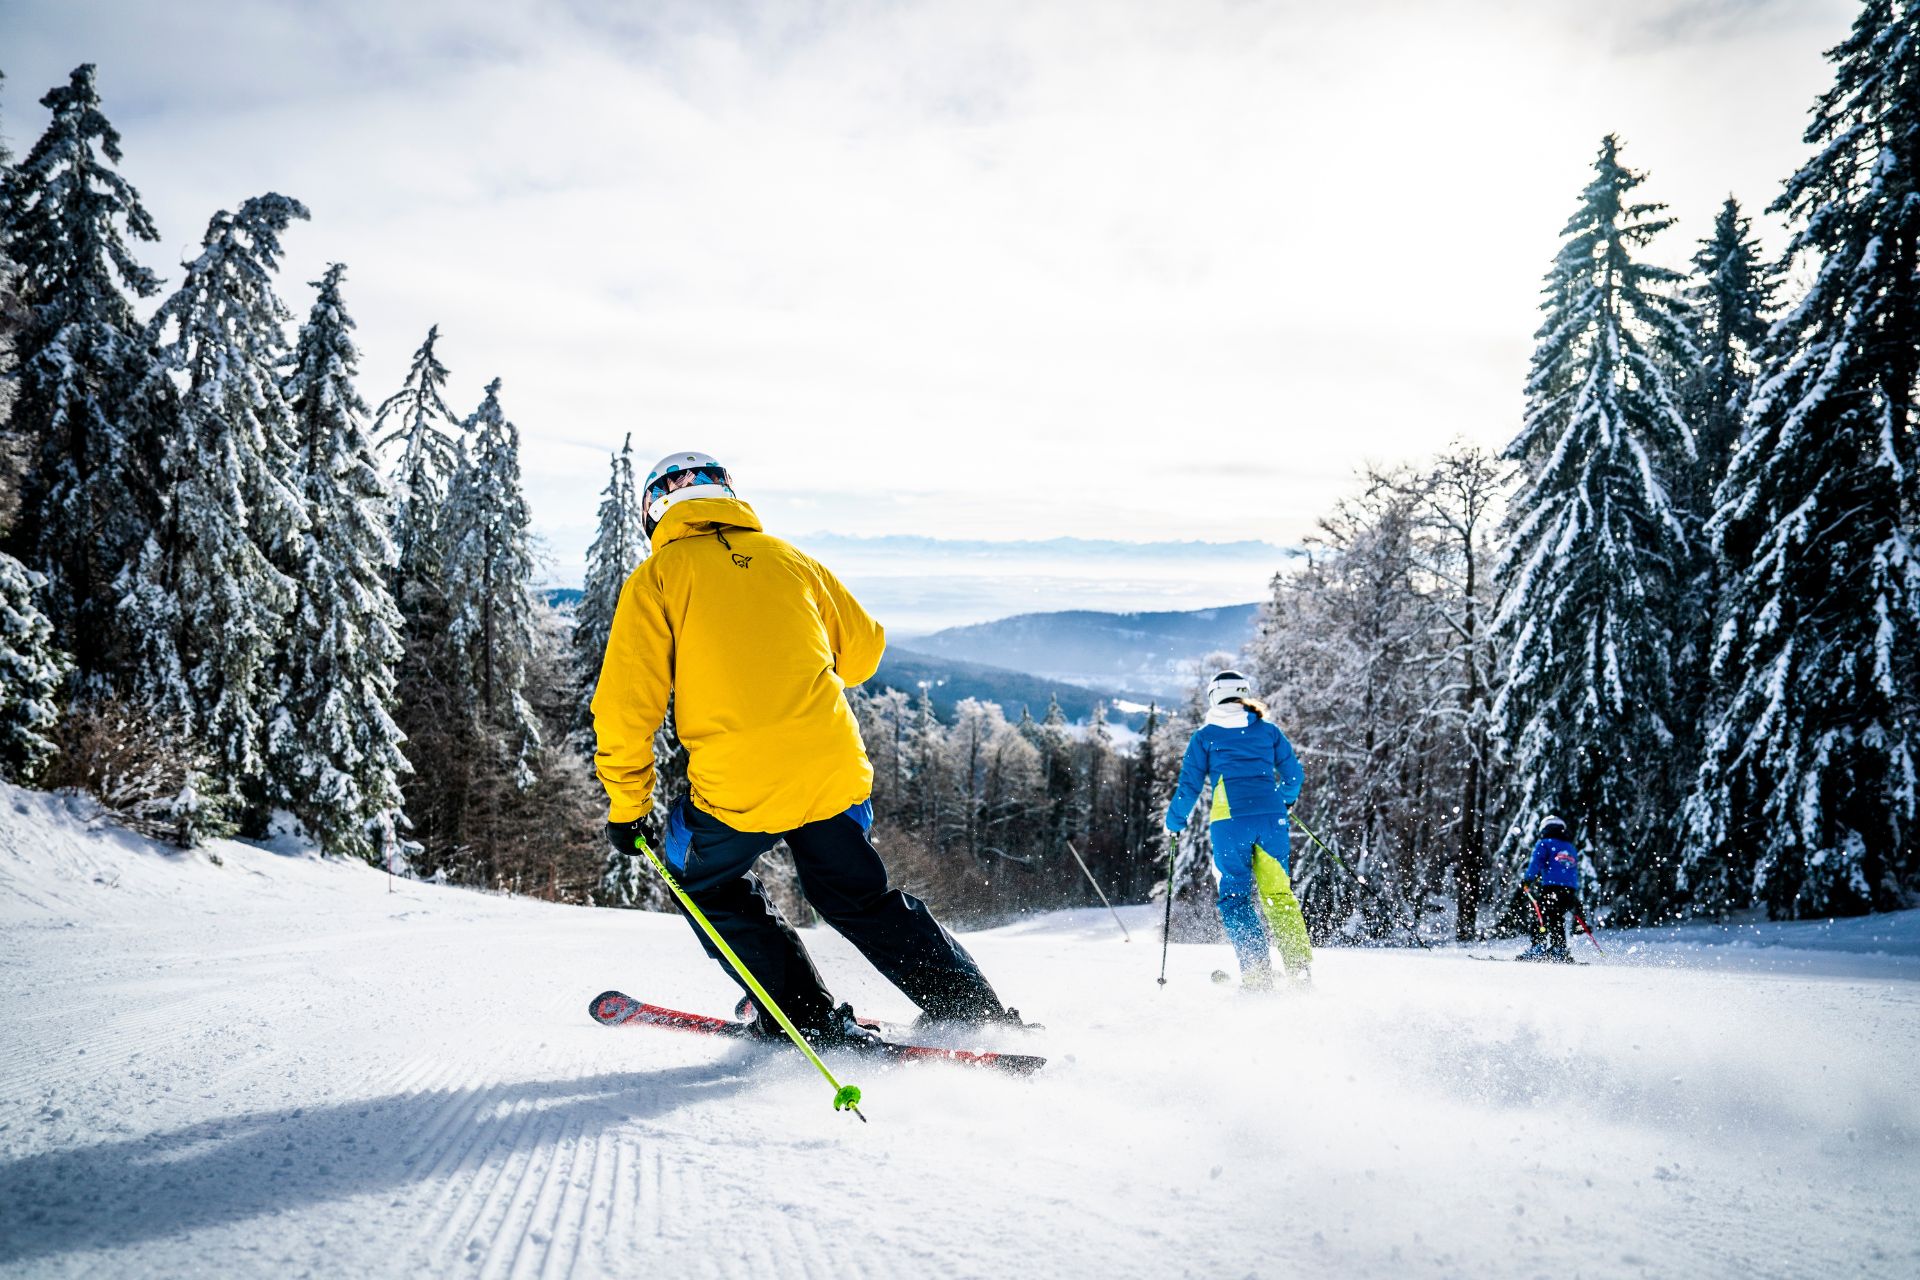 haut-doubs-metabief-ski-alpin-station-sport-hiver-neige-ben-becker-14381